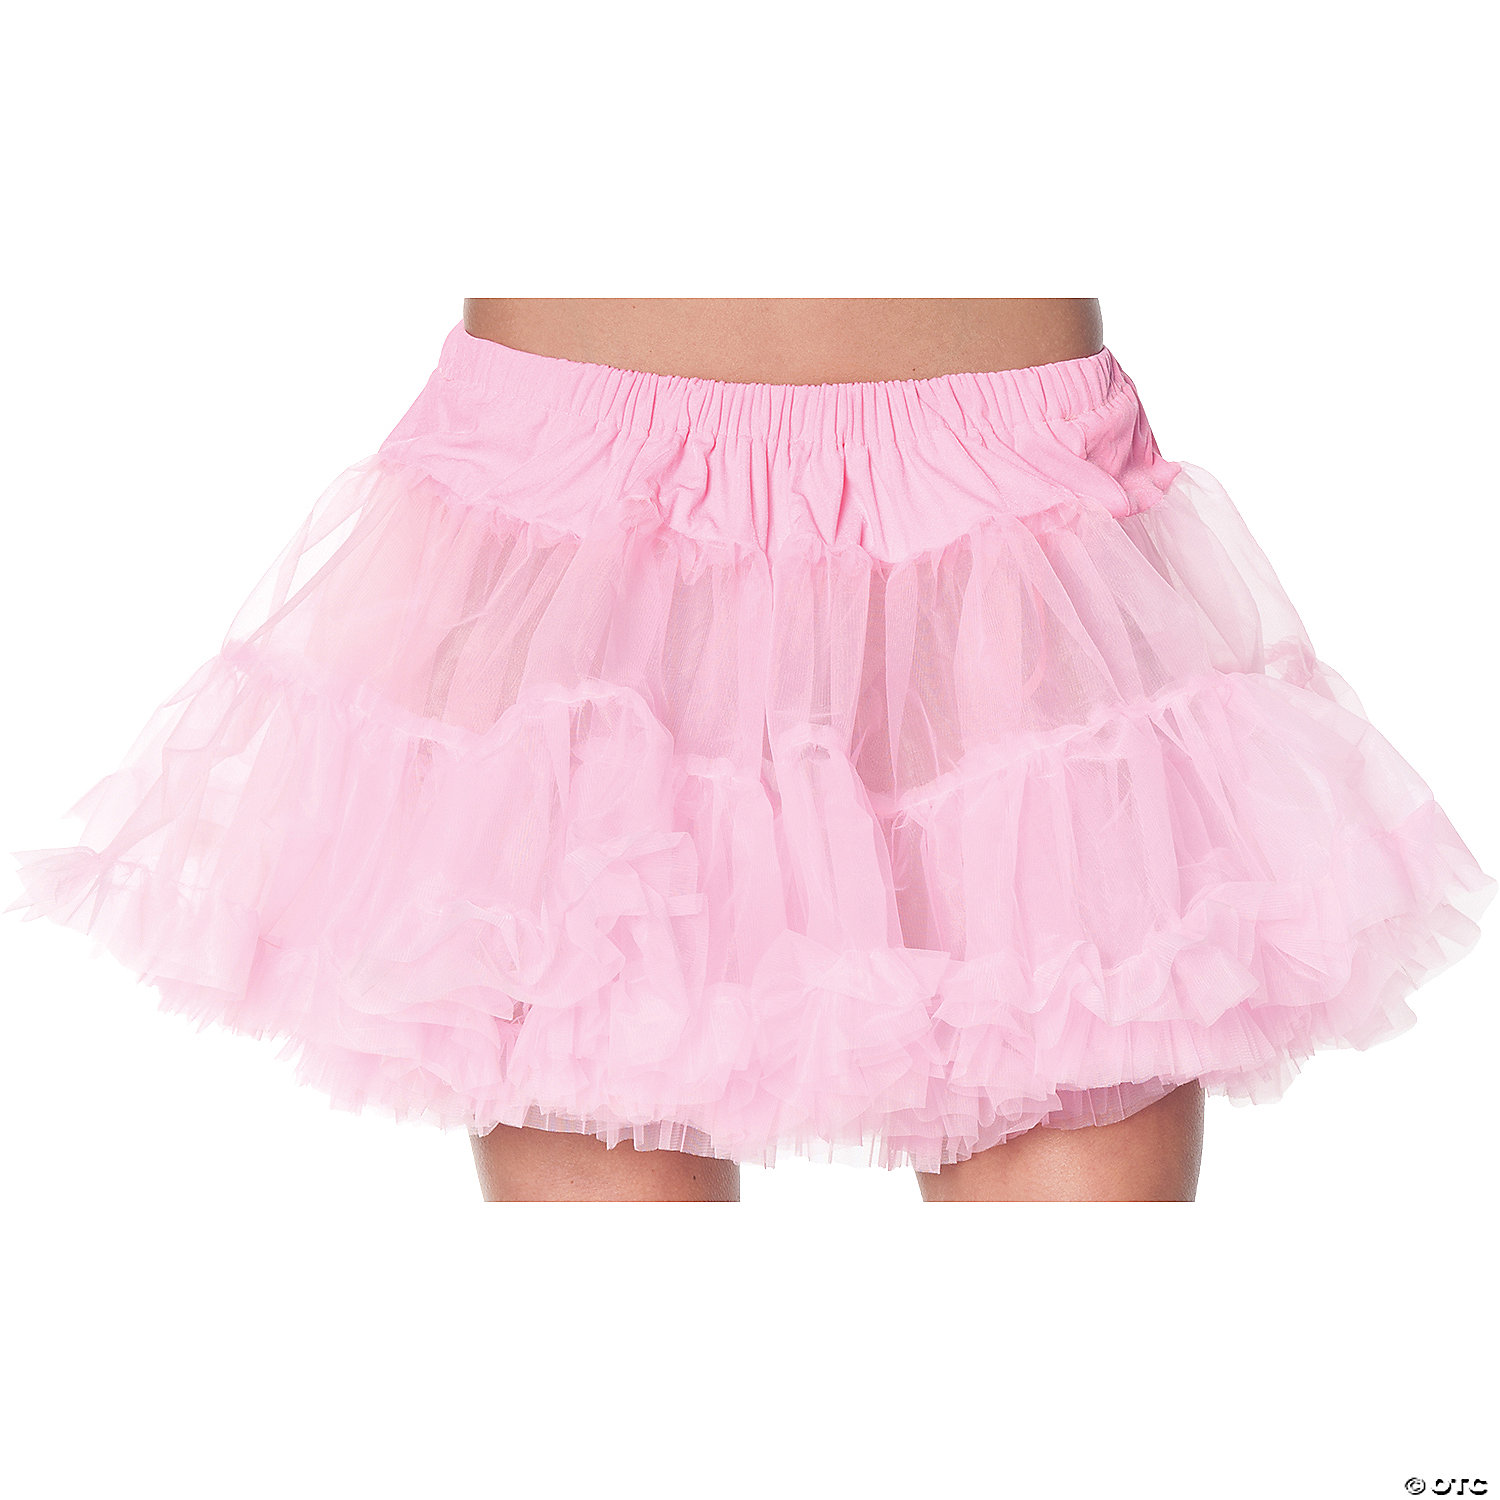 Underwraps Carnival Corp. Women's Petticoat Tutu Adult Bubblegum - Standard for Valentines Day